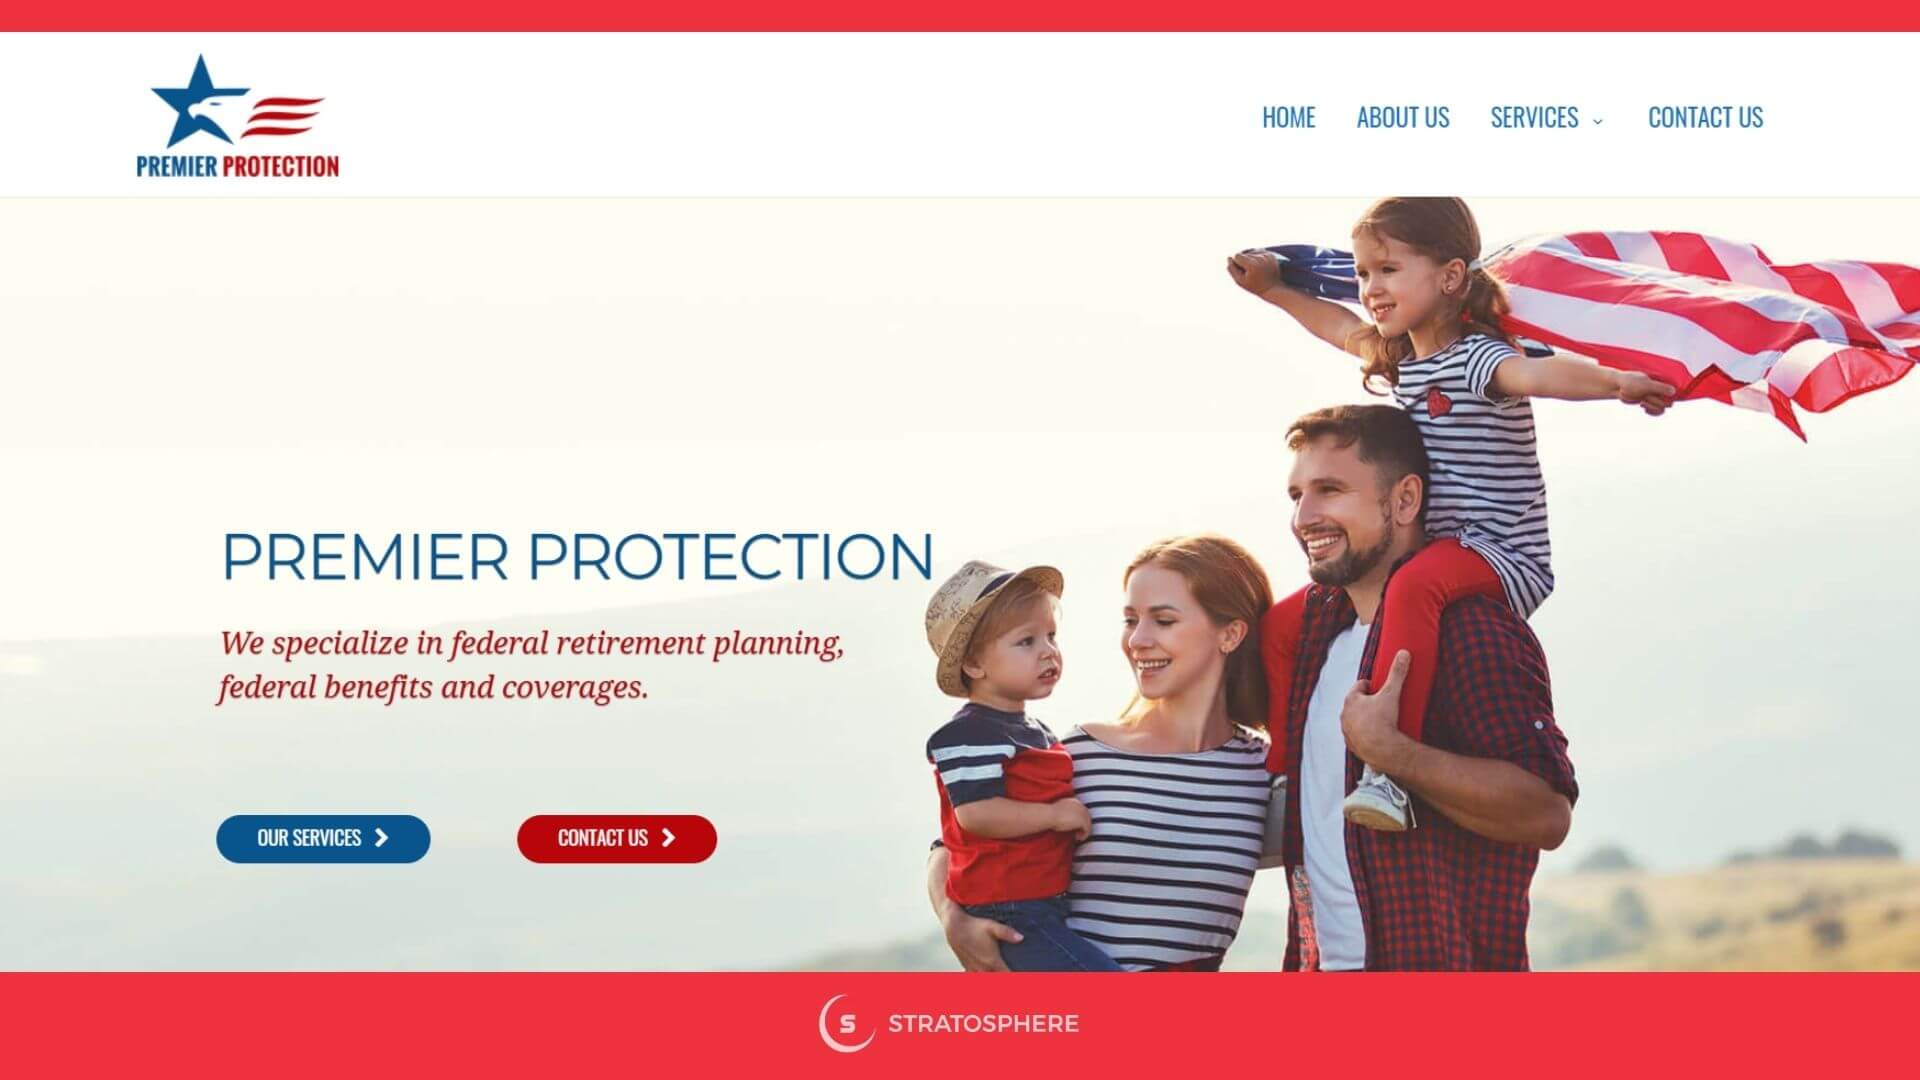 Premium Protection Insurance website design showing patriotic theme consistency